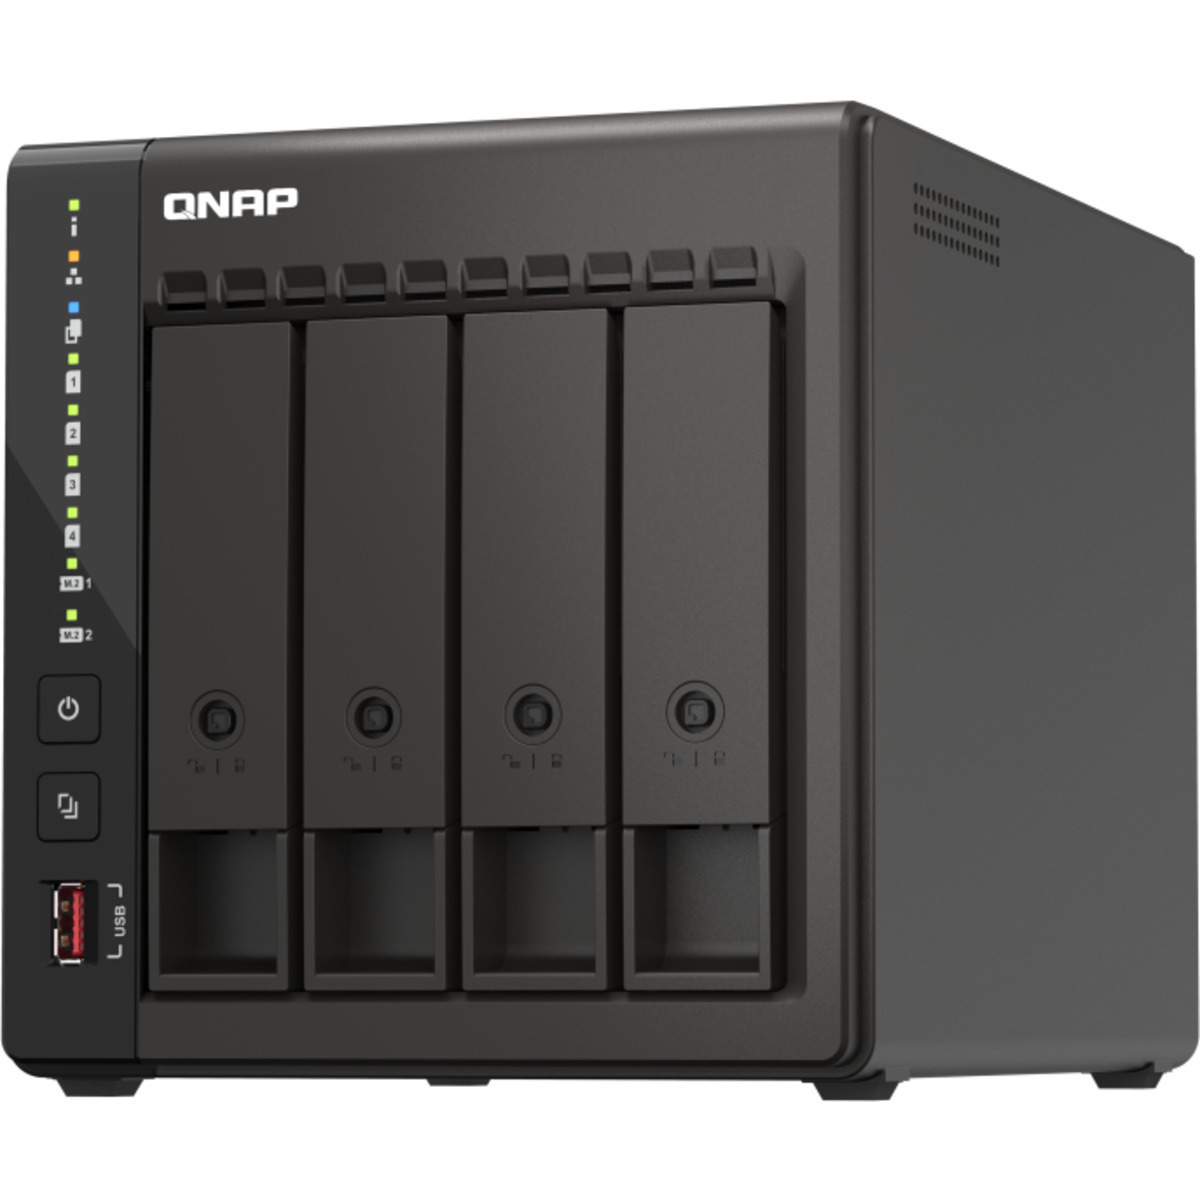 QNAP TS-453E 44tb 4-Bay Desktop Multimedia / Power User / Business NAS - Network Attached Storage Device 2x22tb Western Digital Gold WD221KRYZ 3.5 7200rpm SATA 6Gb/s HDD ENTERPRISE Class Drives Installed - Burn-In Tested TS-453E